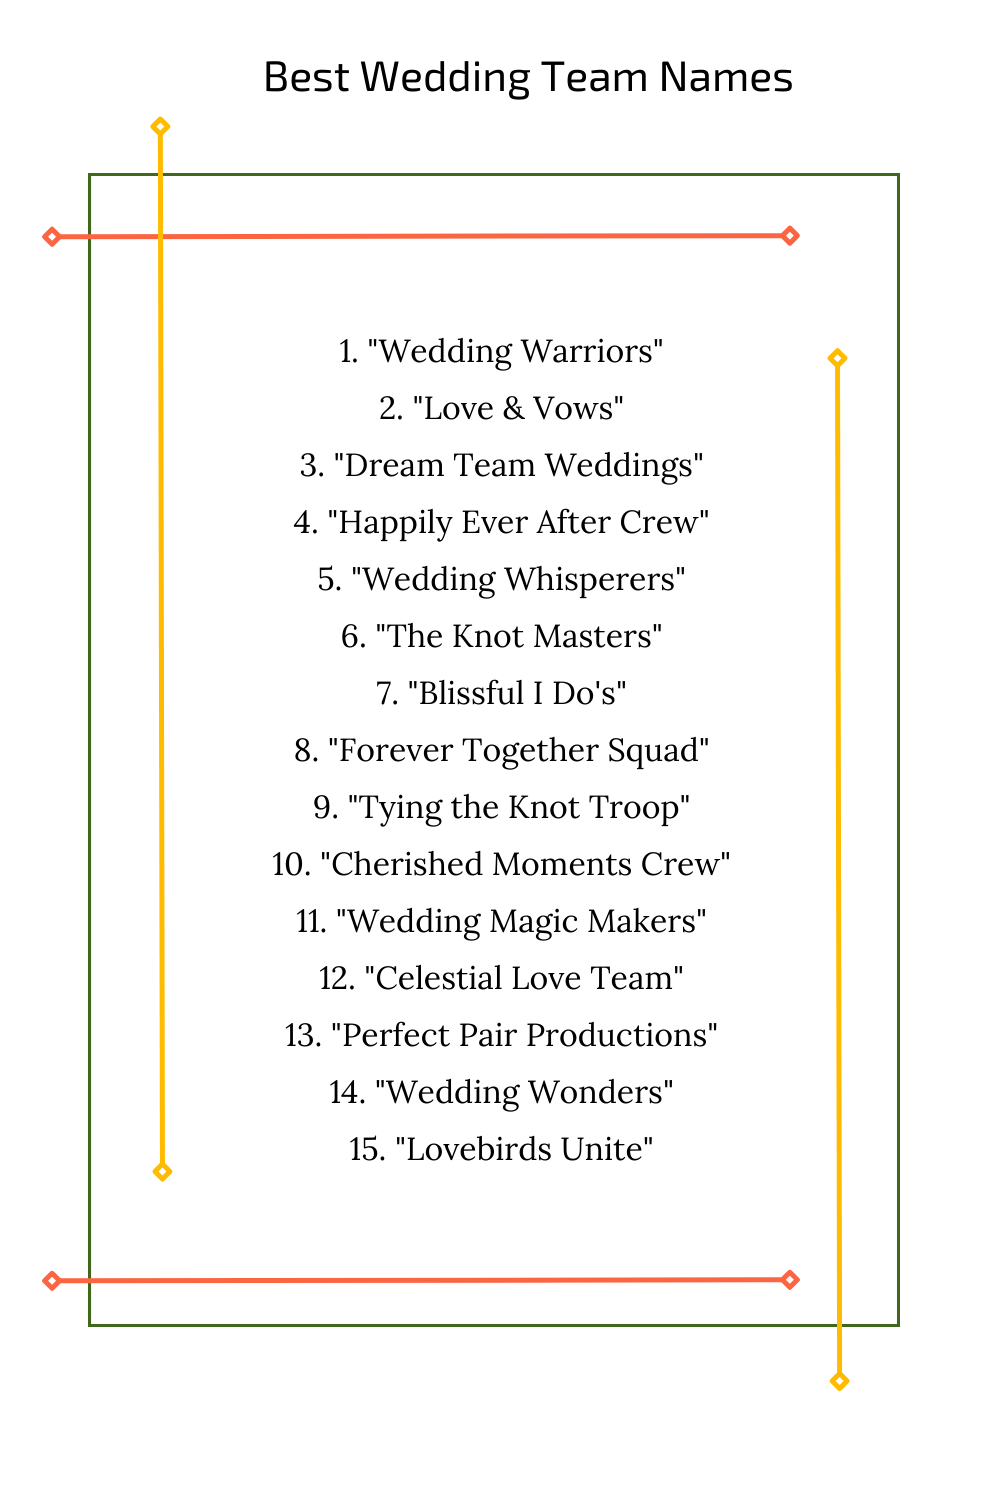 Best Wedding Team Names